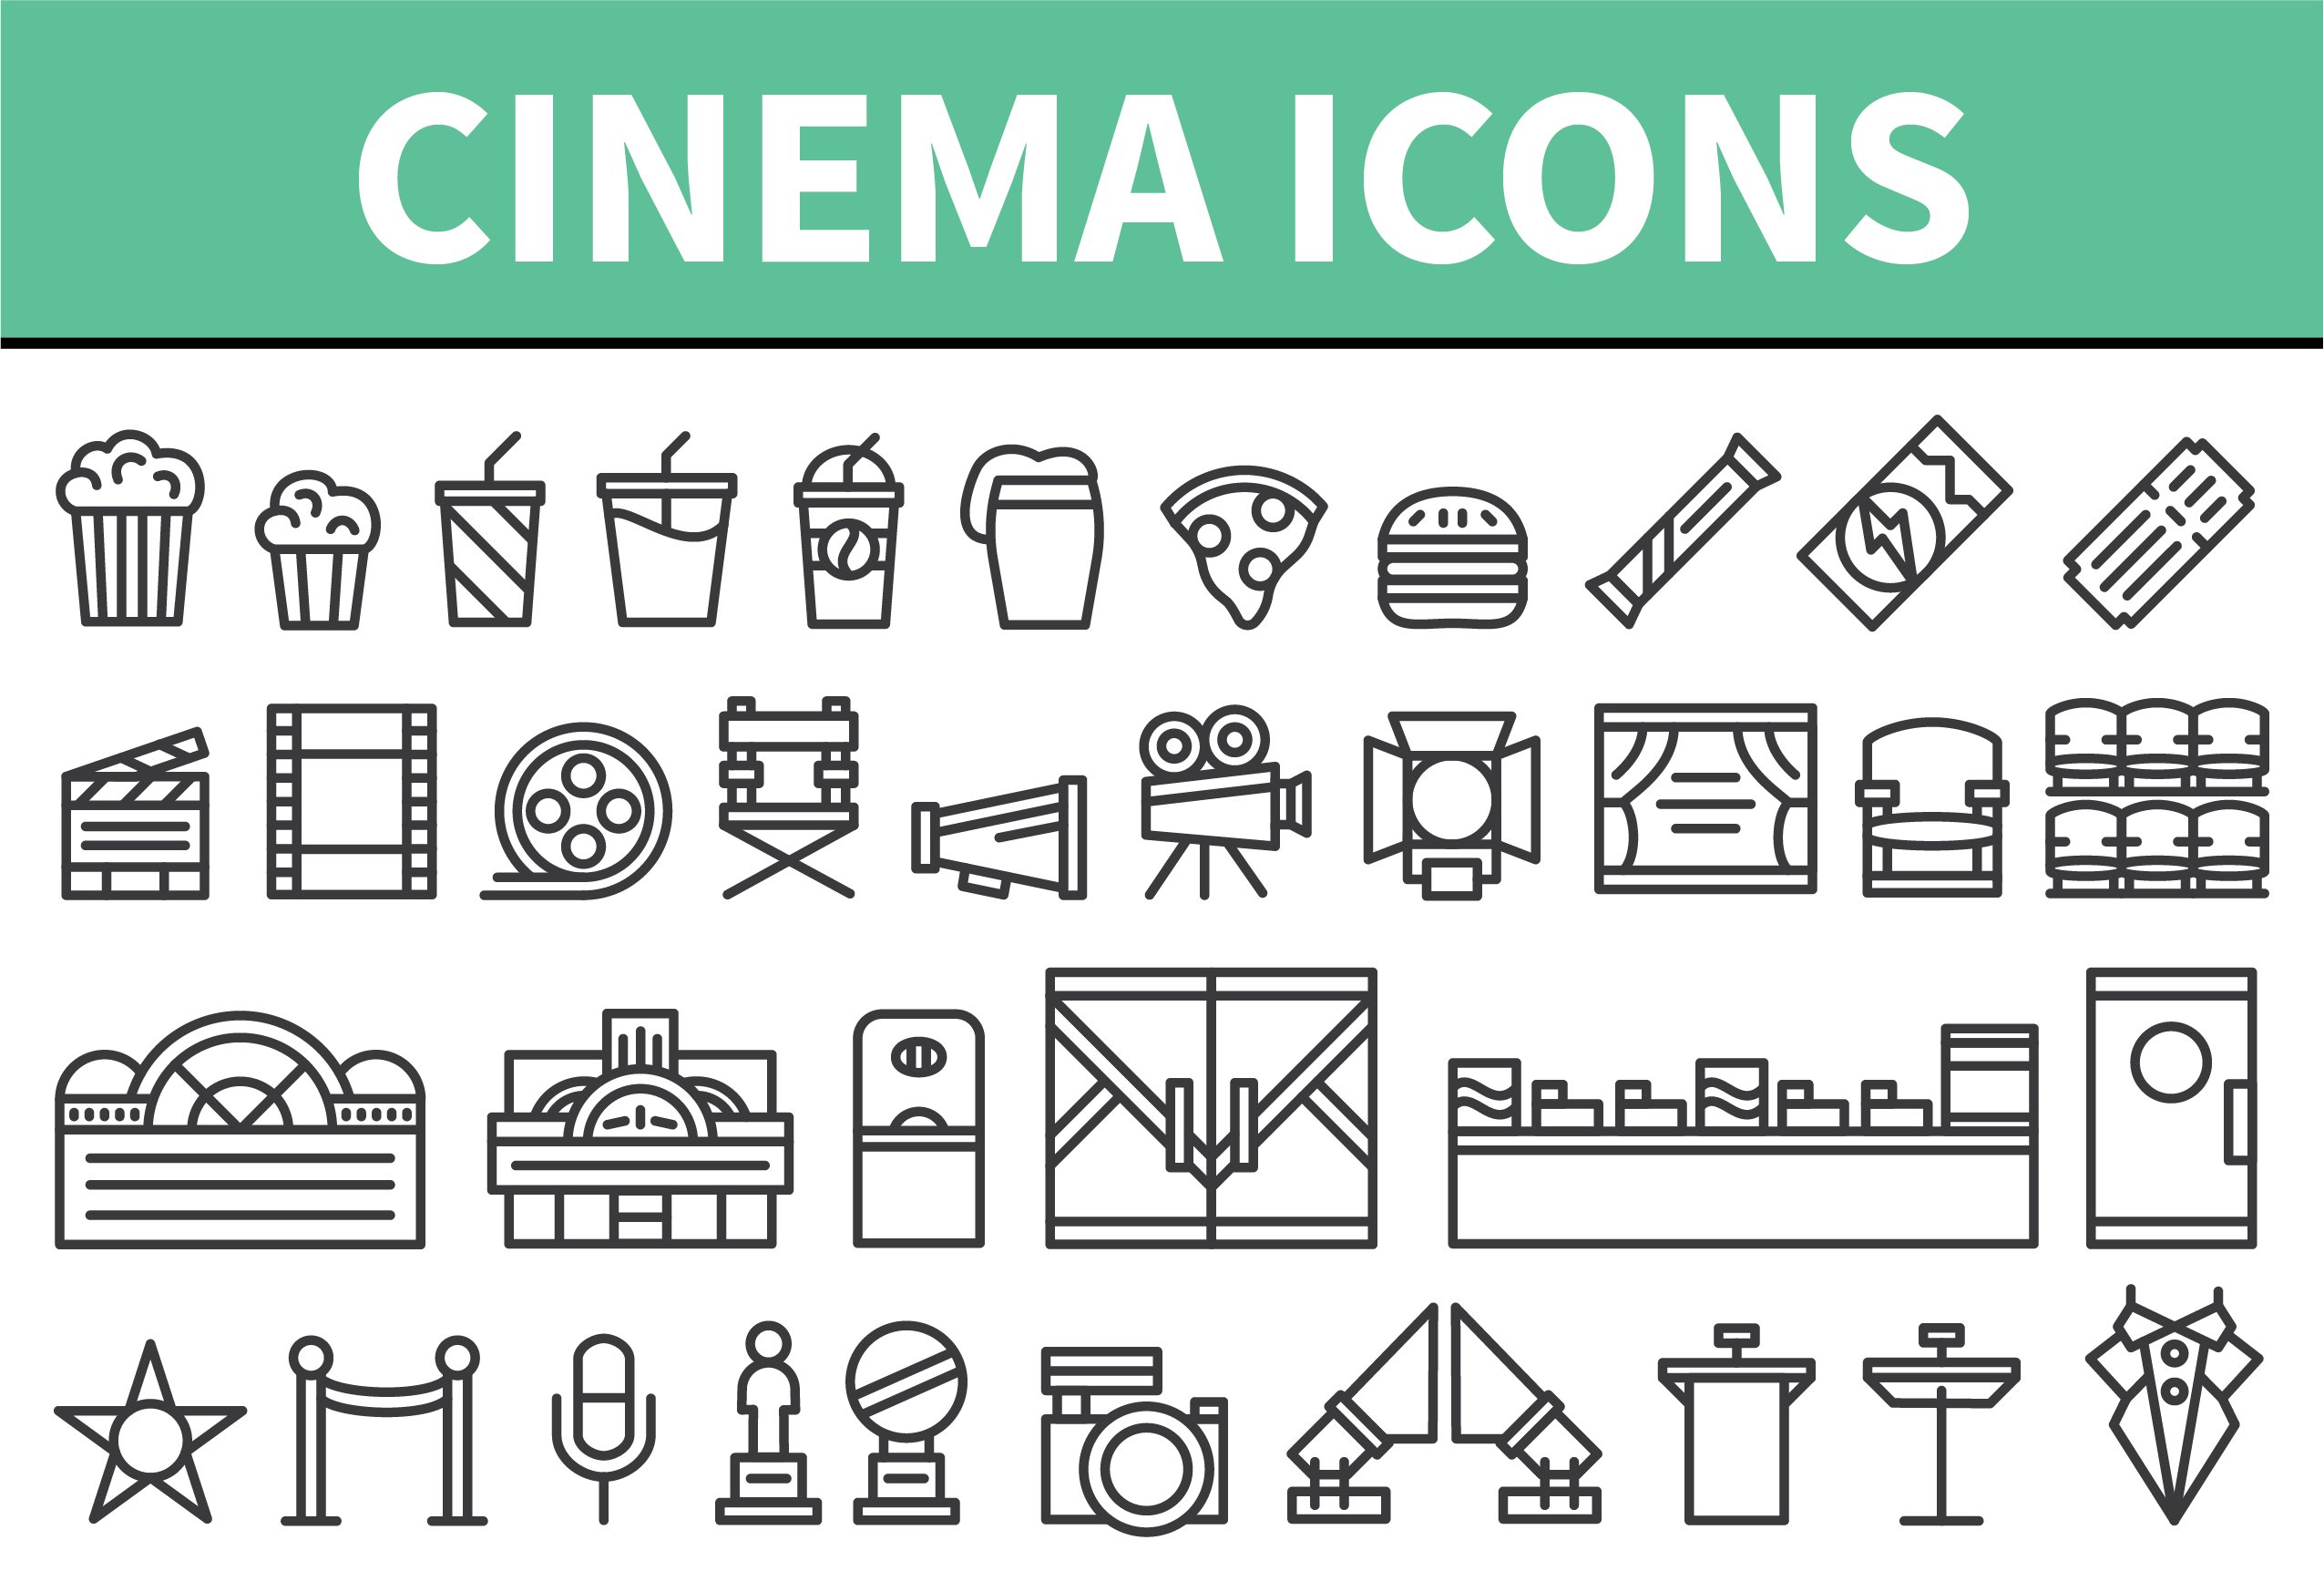 Cinema / Movie / Theater / Film Icon preview image.